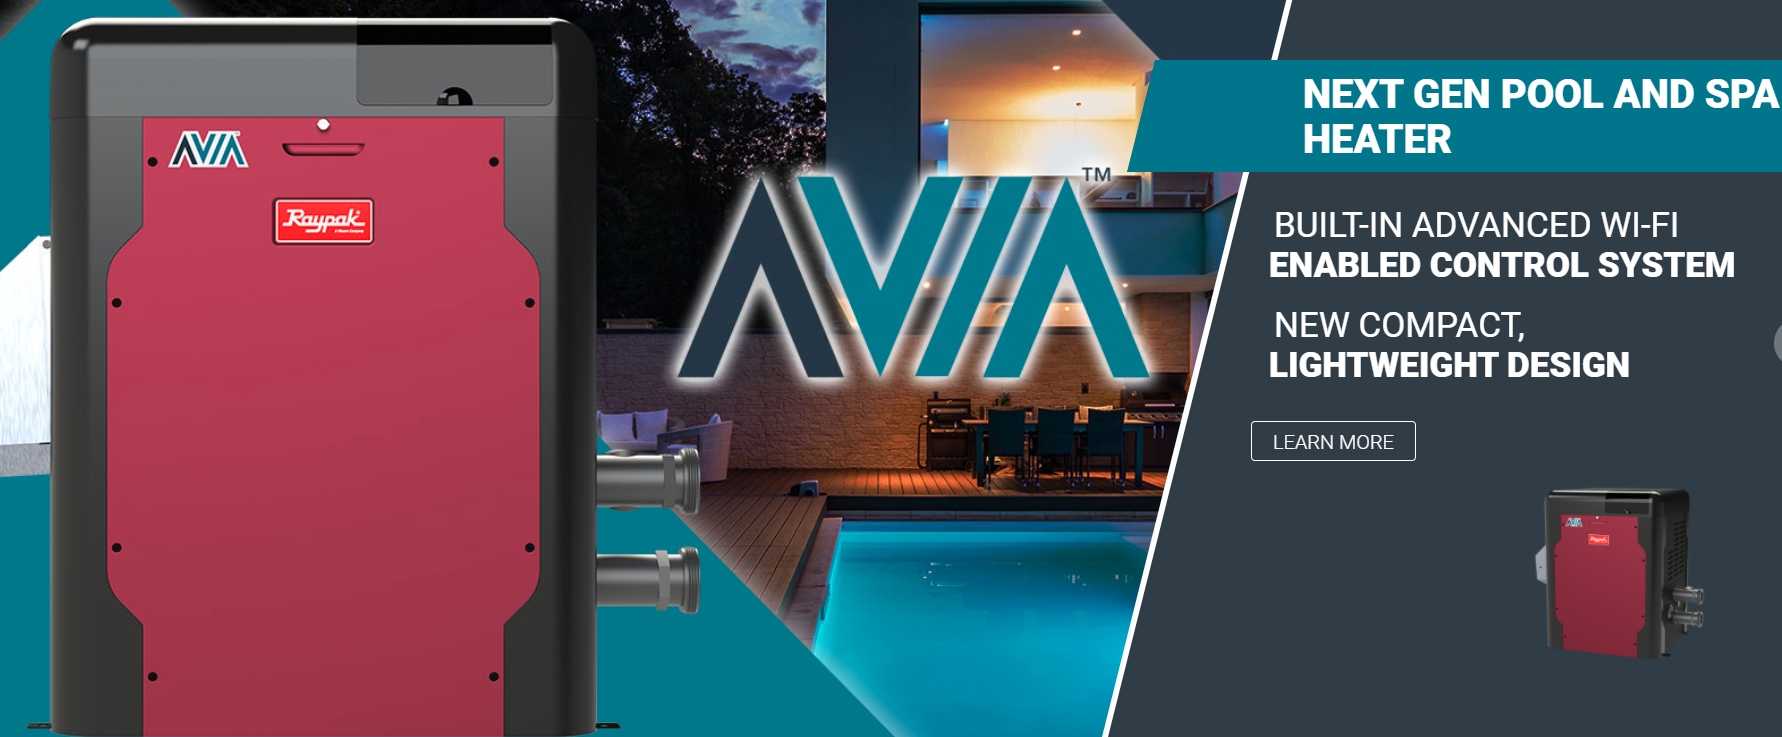 Raypak Avia 404A LOW NOx Pool and Spa Heater - Propane - 018039